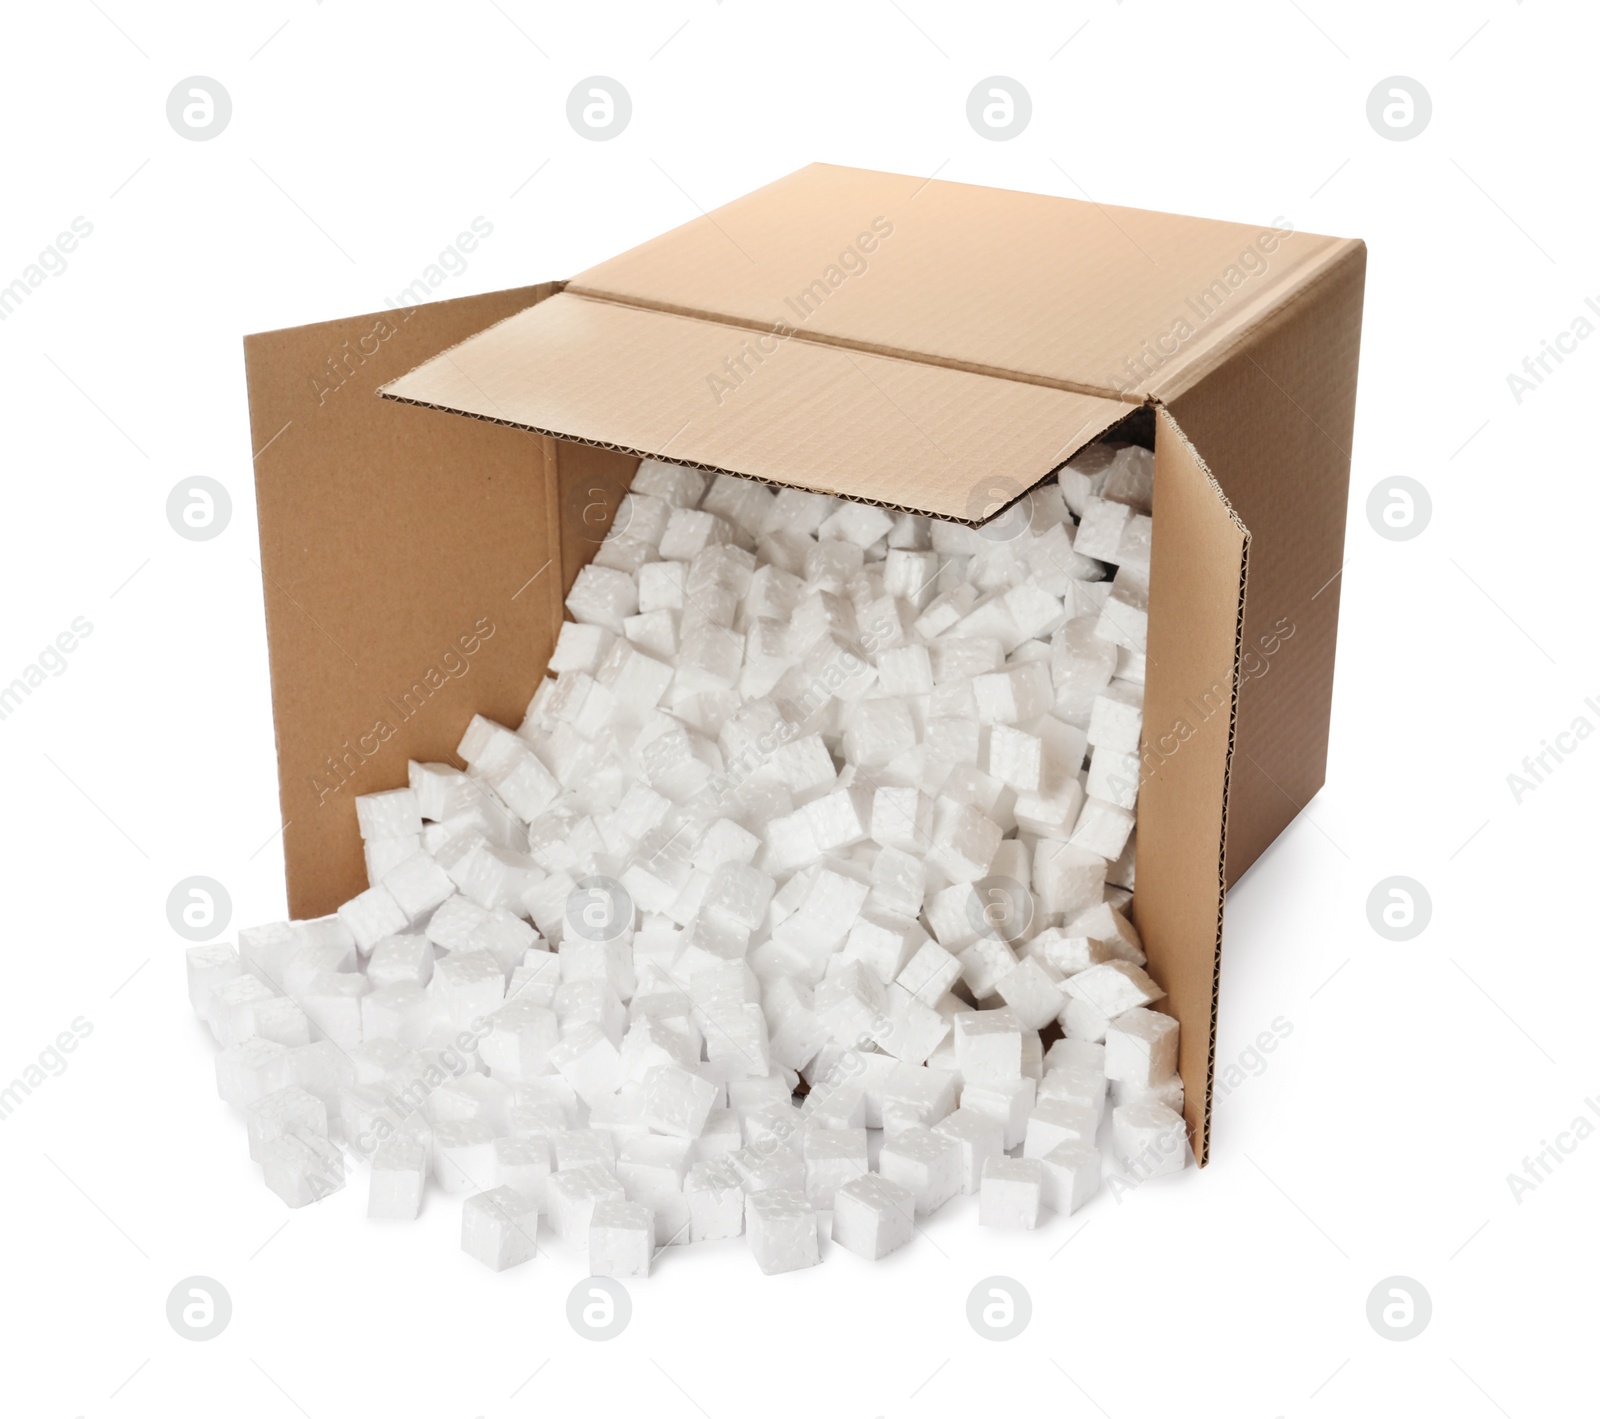 Photo of Overturned cardboard box with styrofoam cubes on white background